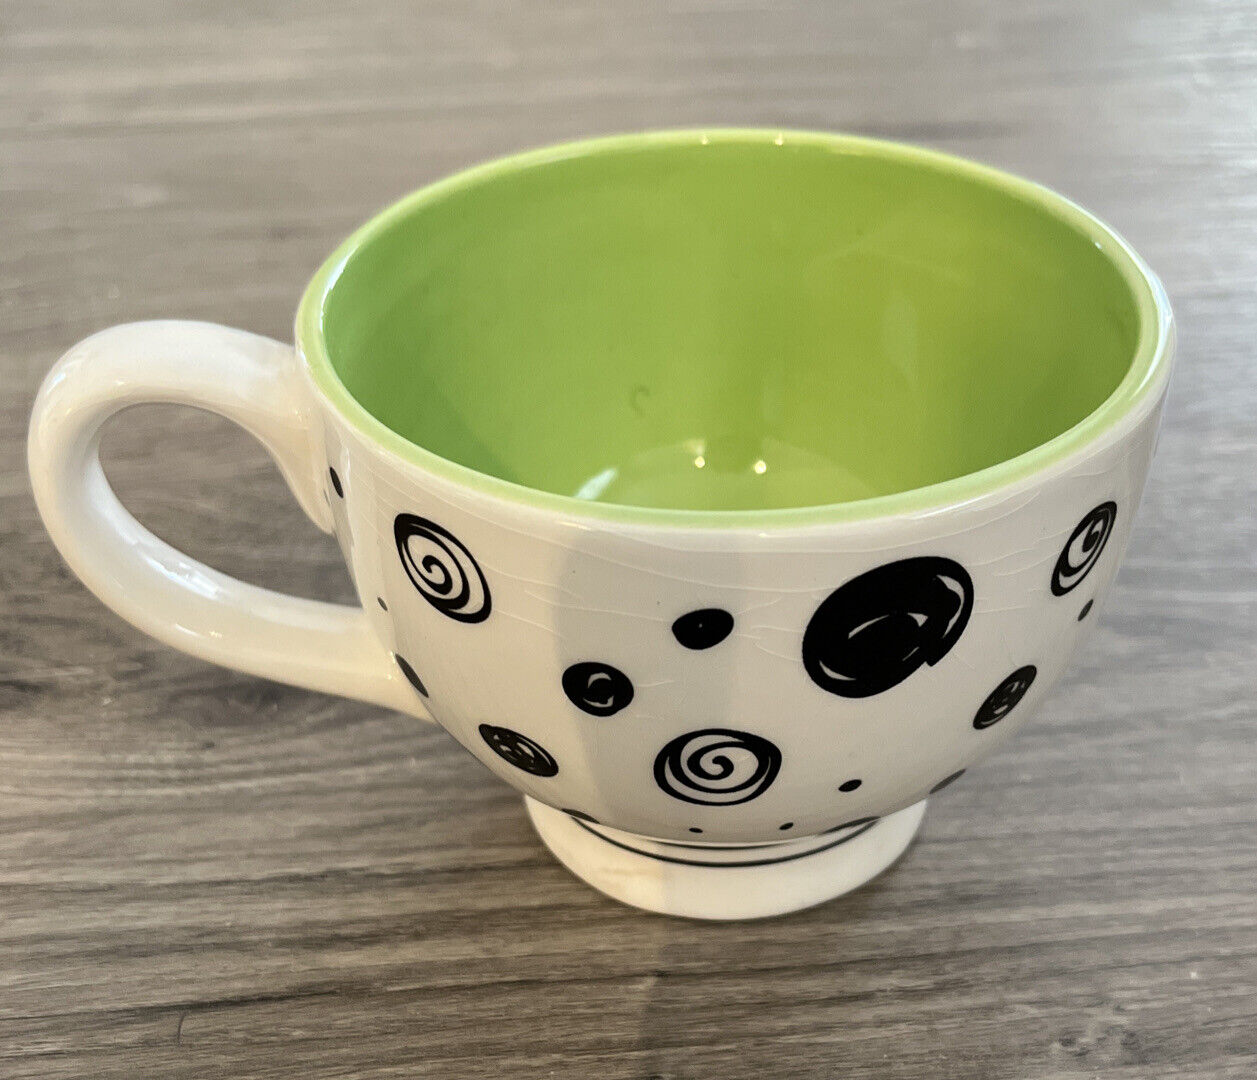 Ganz Coffee Tea Mug Cup Green White